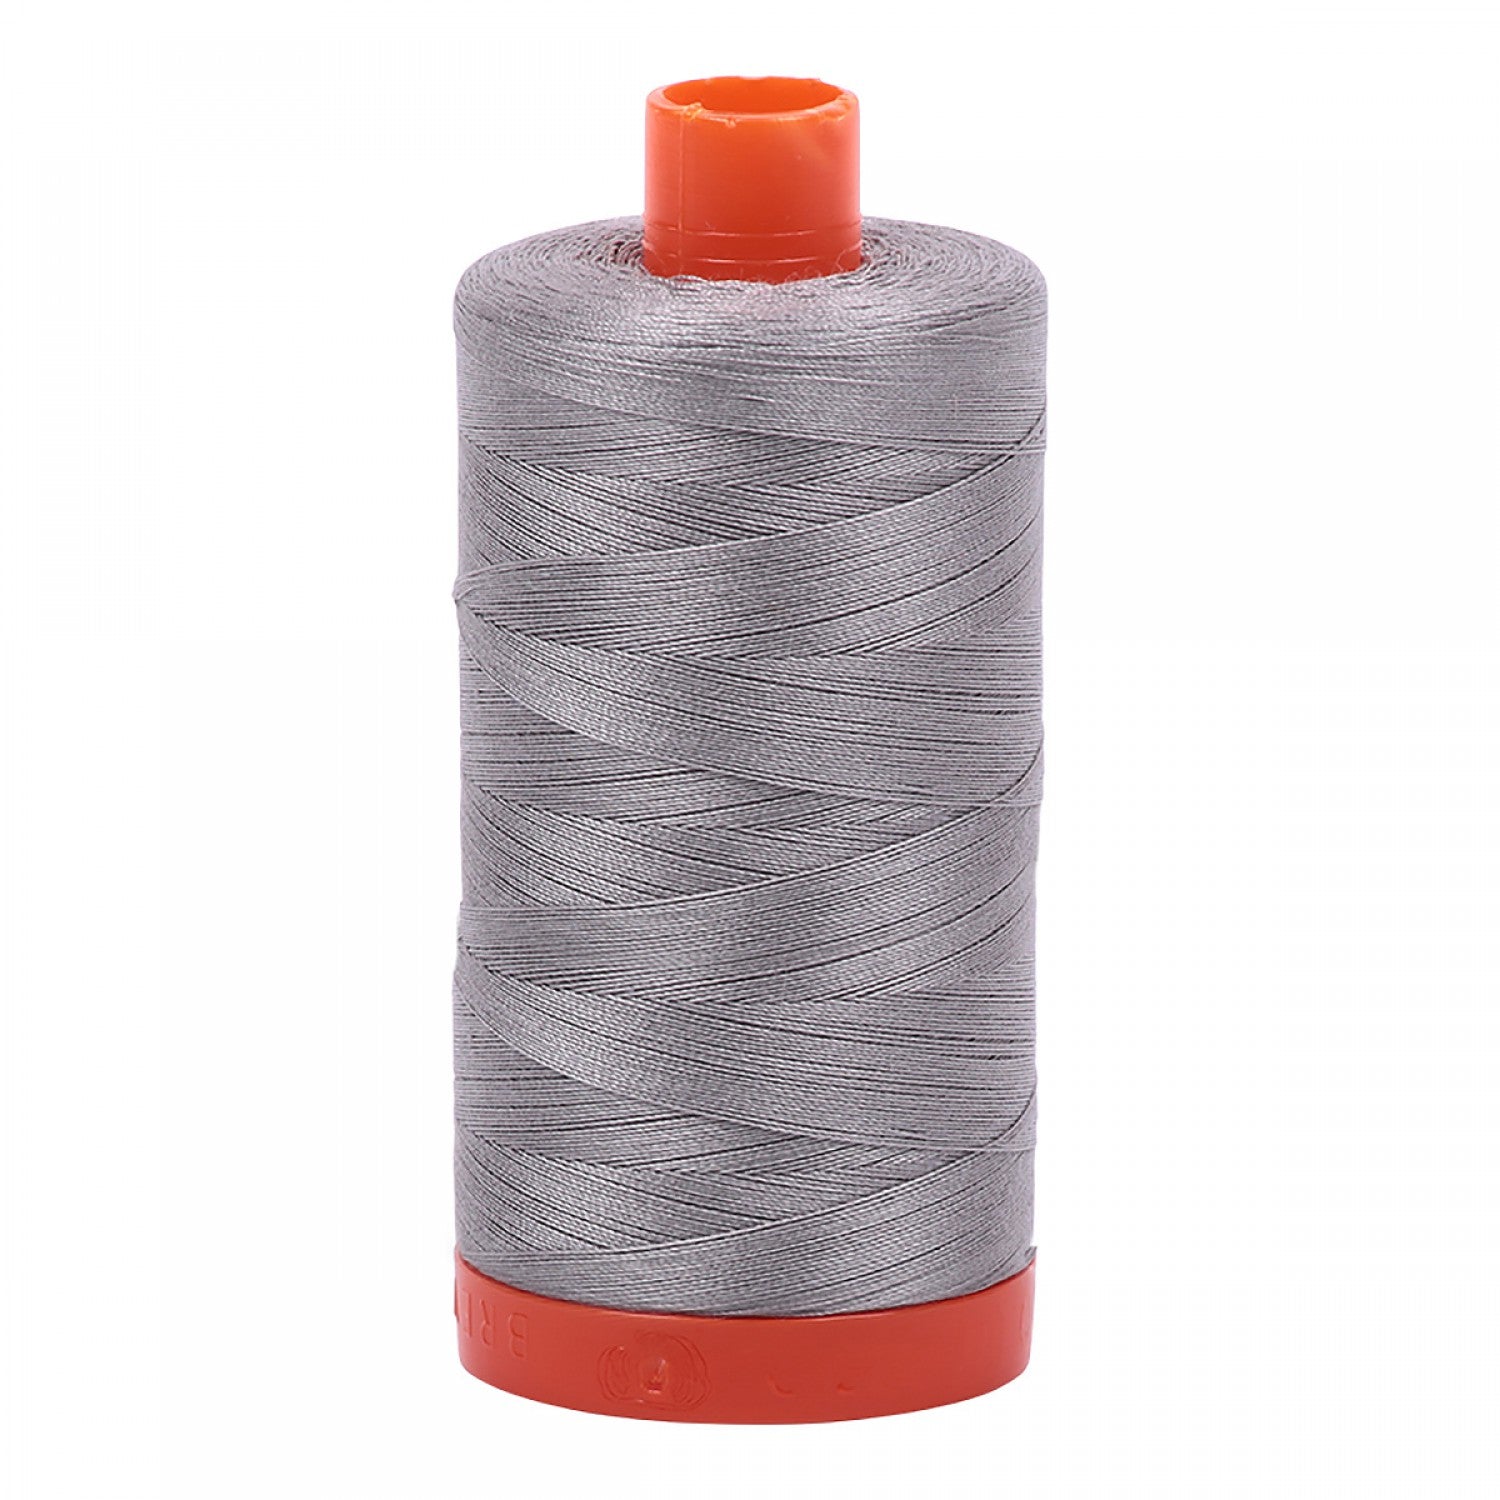 Aurifil Mako 50 wt Cotton Thread - 1422 yds - Stainless Steel (2620)